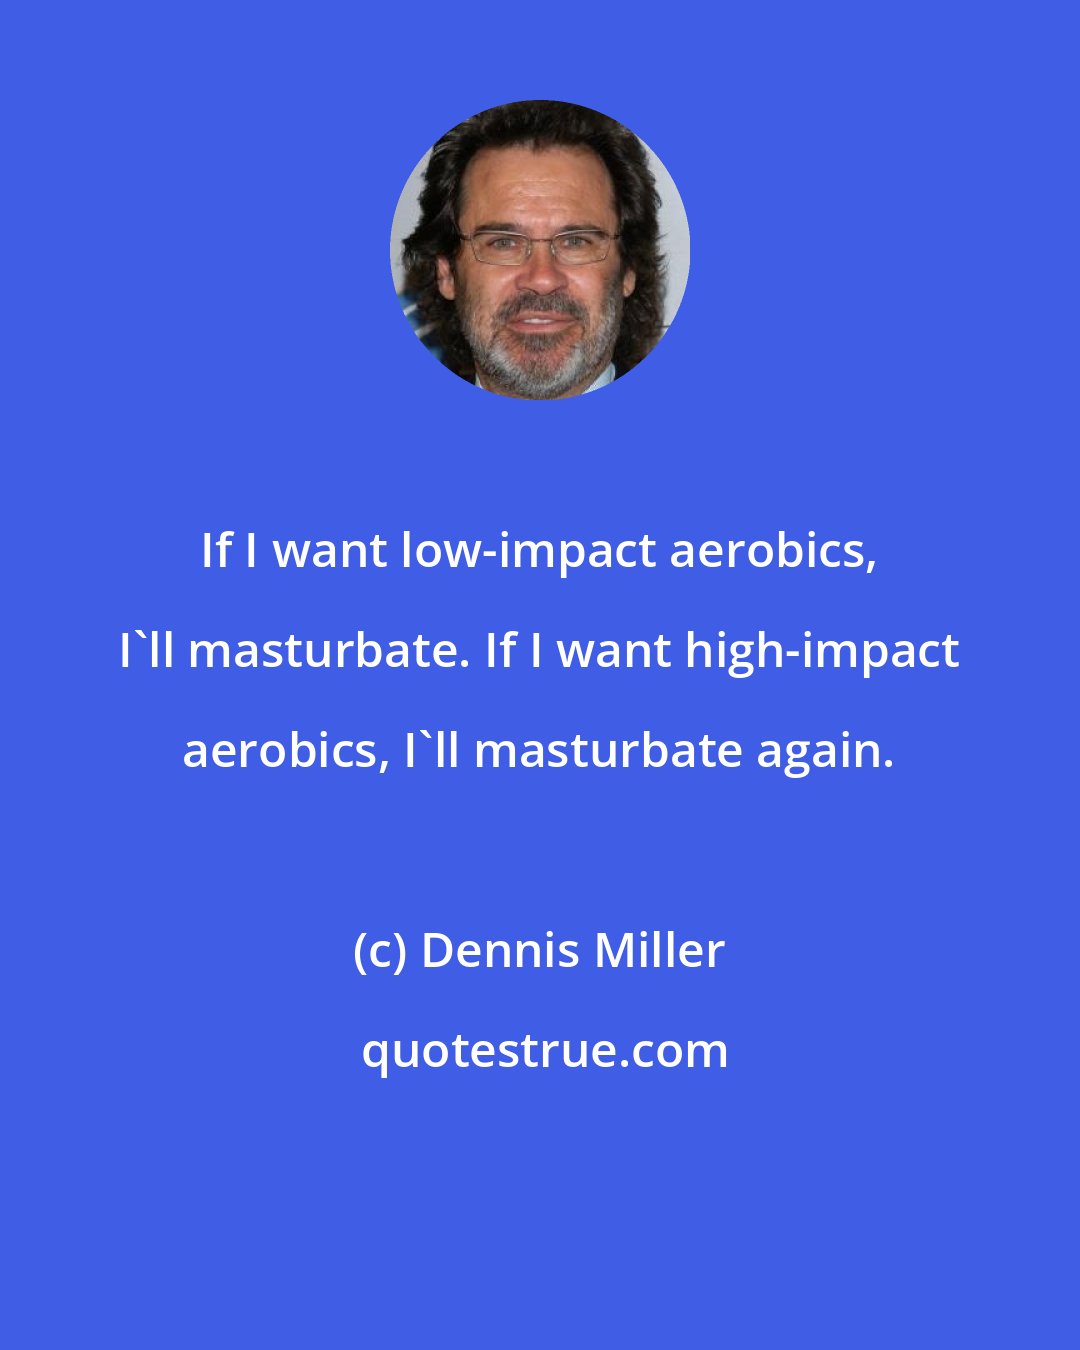 Dennis Miller: If I want low-impact aerobics, I'll masturbate. If I want high-impact aerobics, I'll masturbate again.